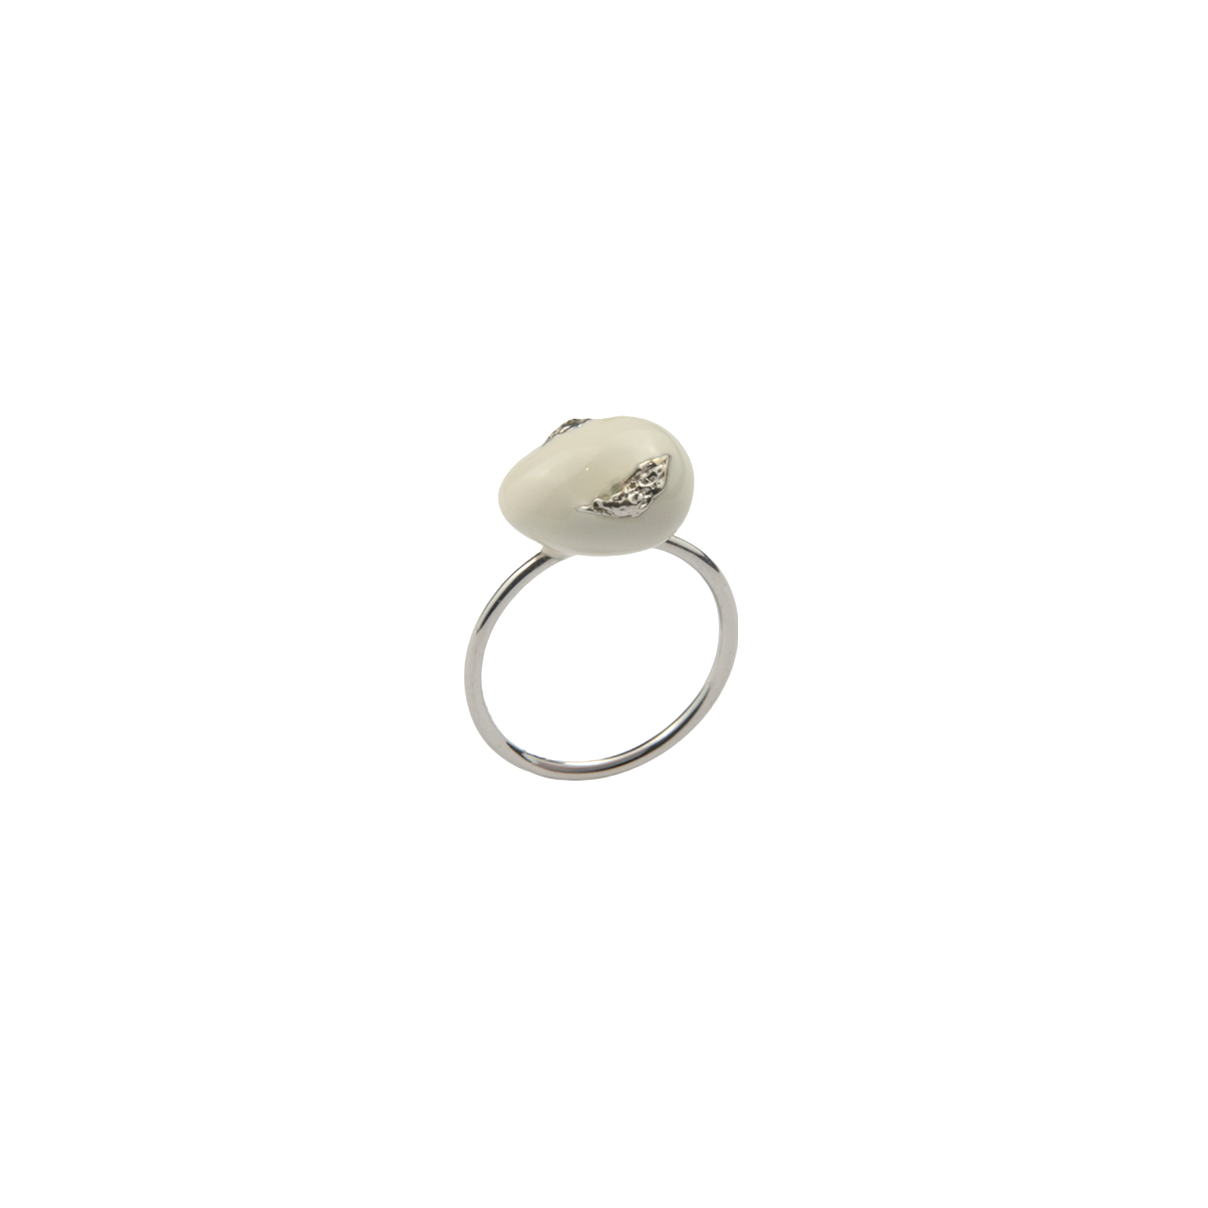 Hanying Small Oval Enamel Ring (White)